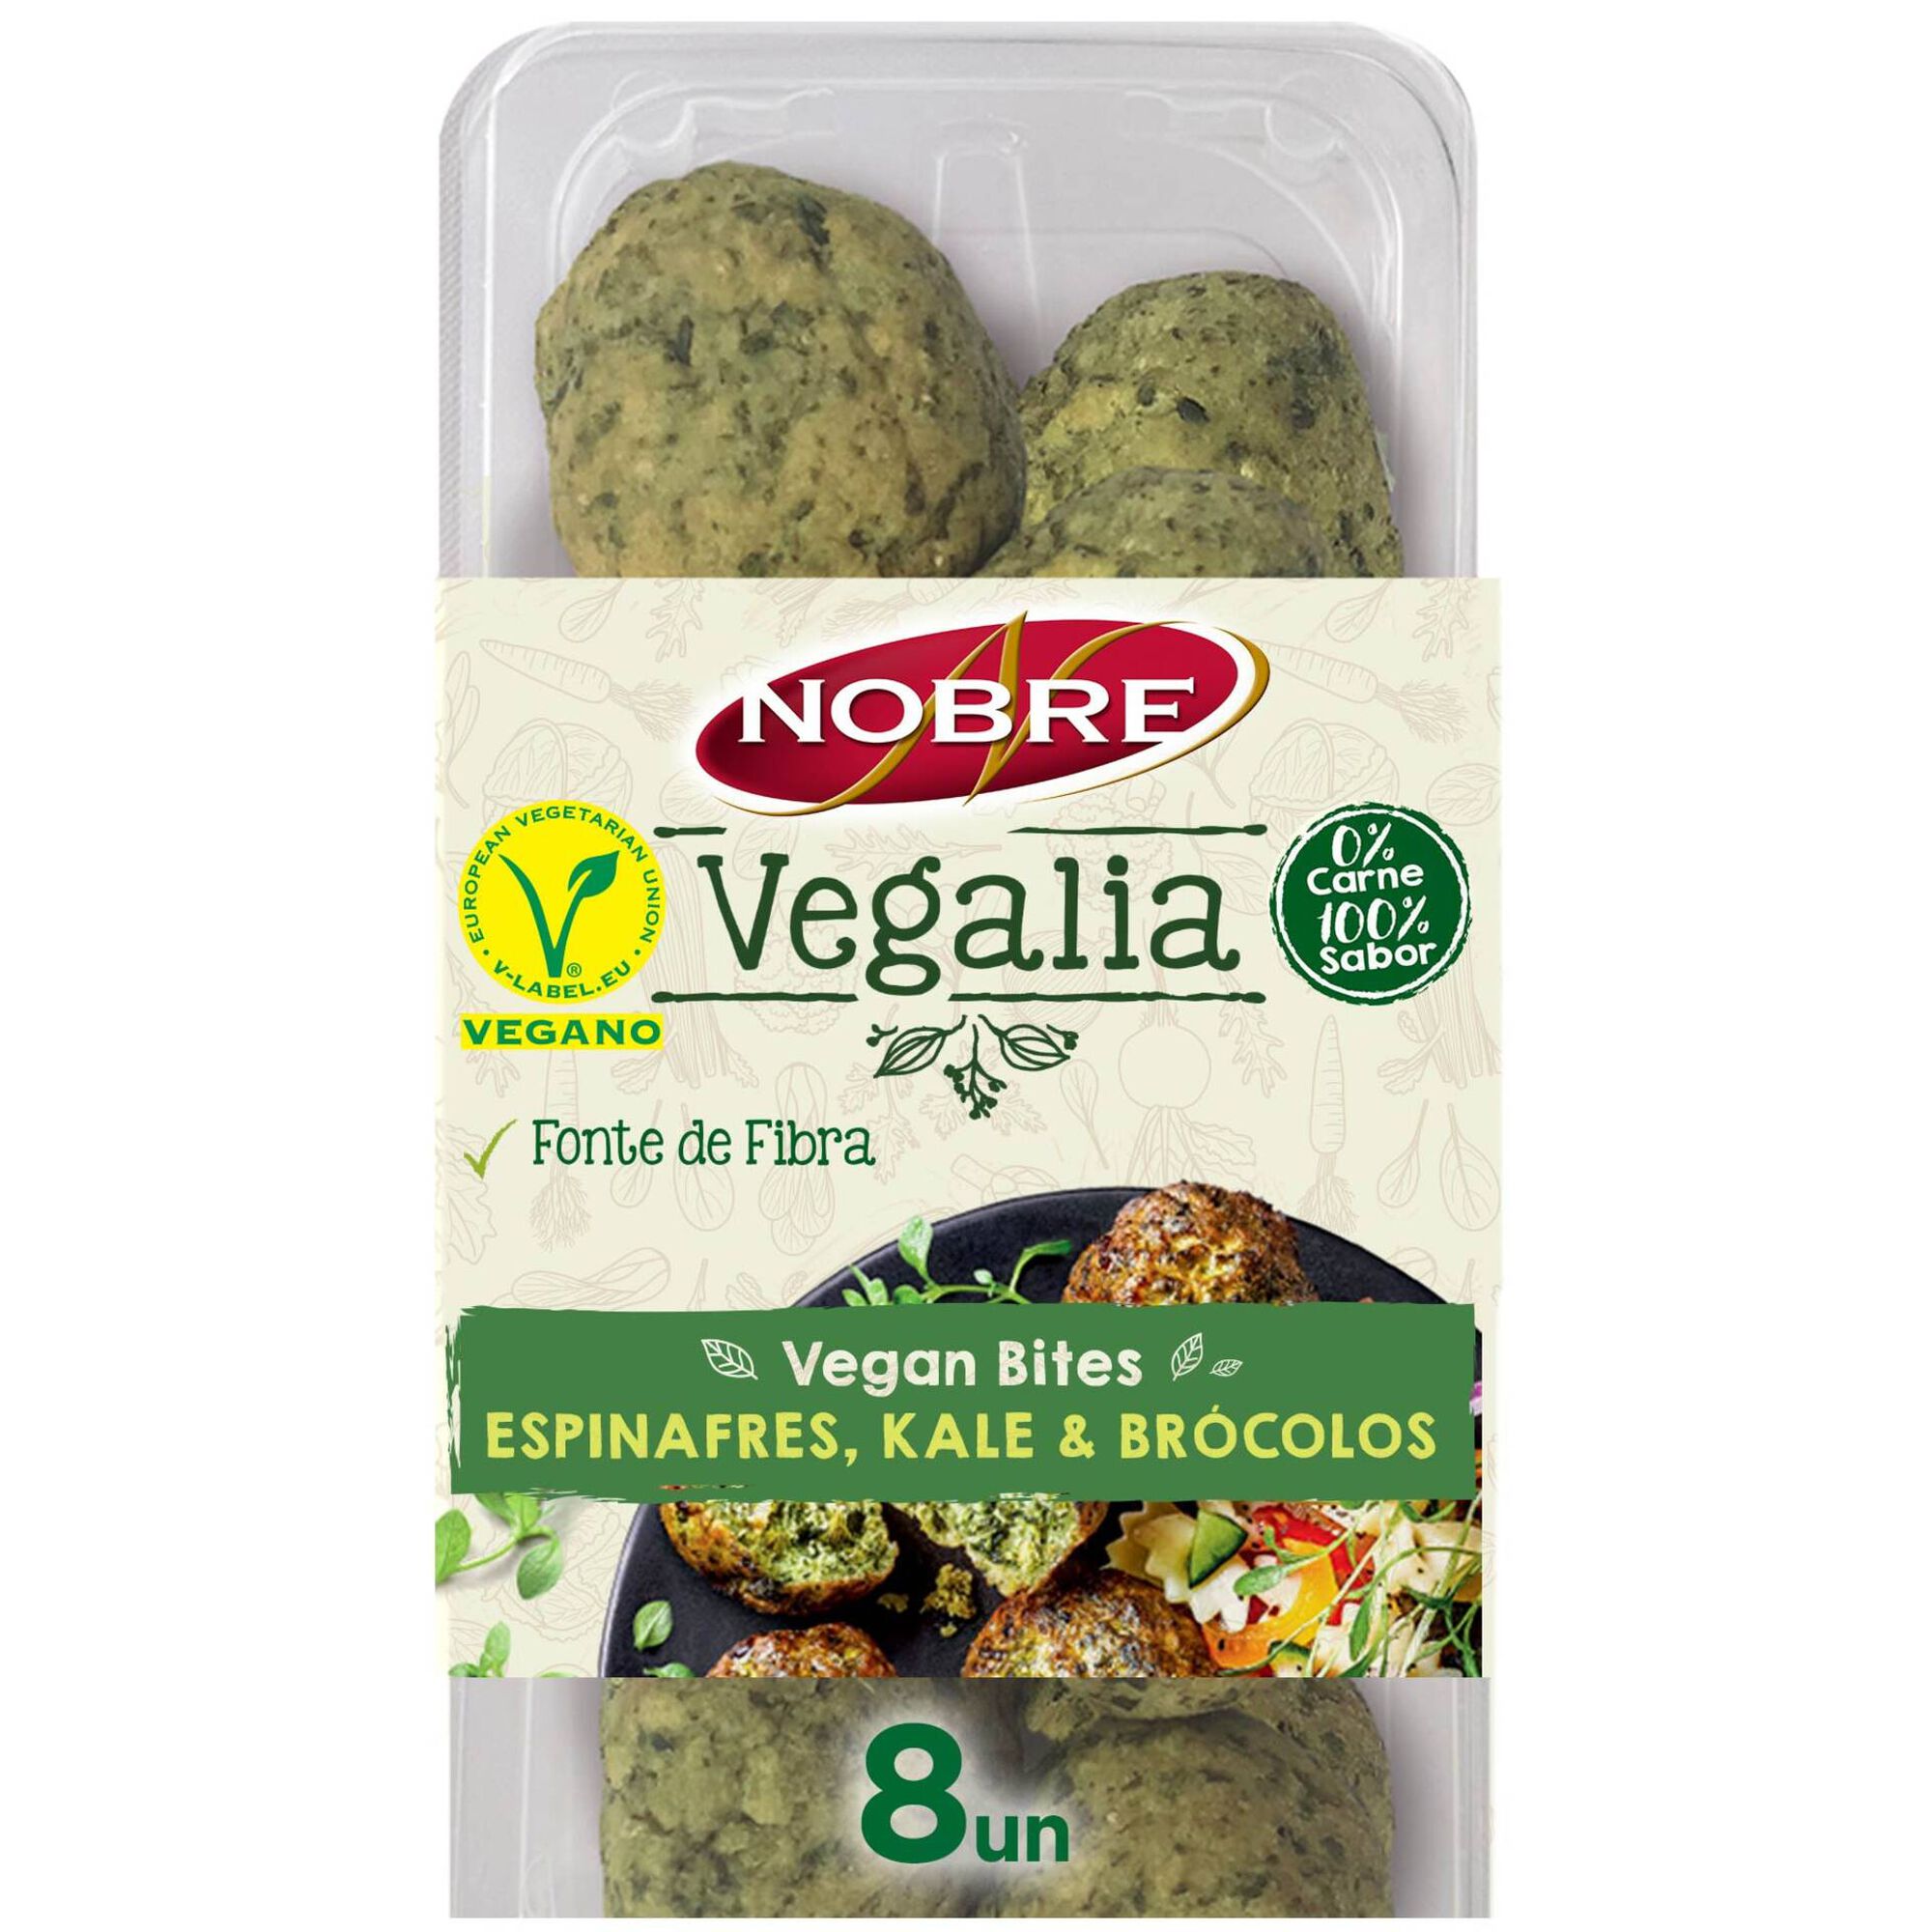 Vegan Bites Espinafres, Kale & Brócolos